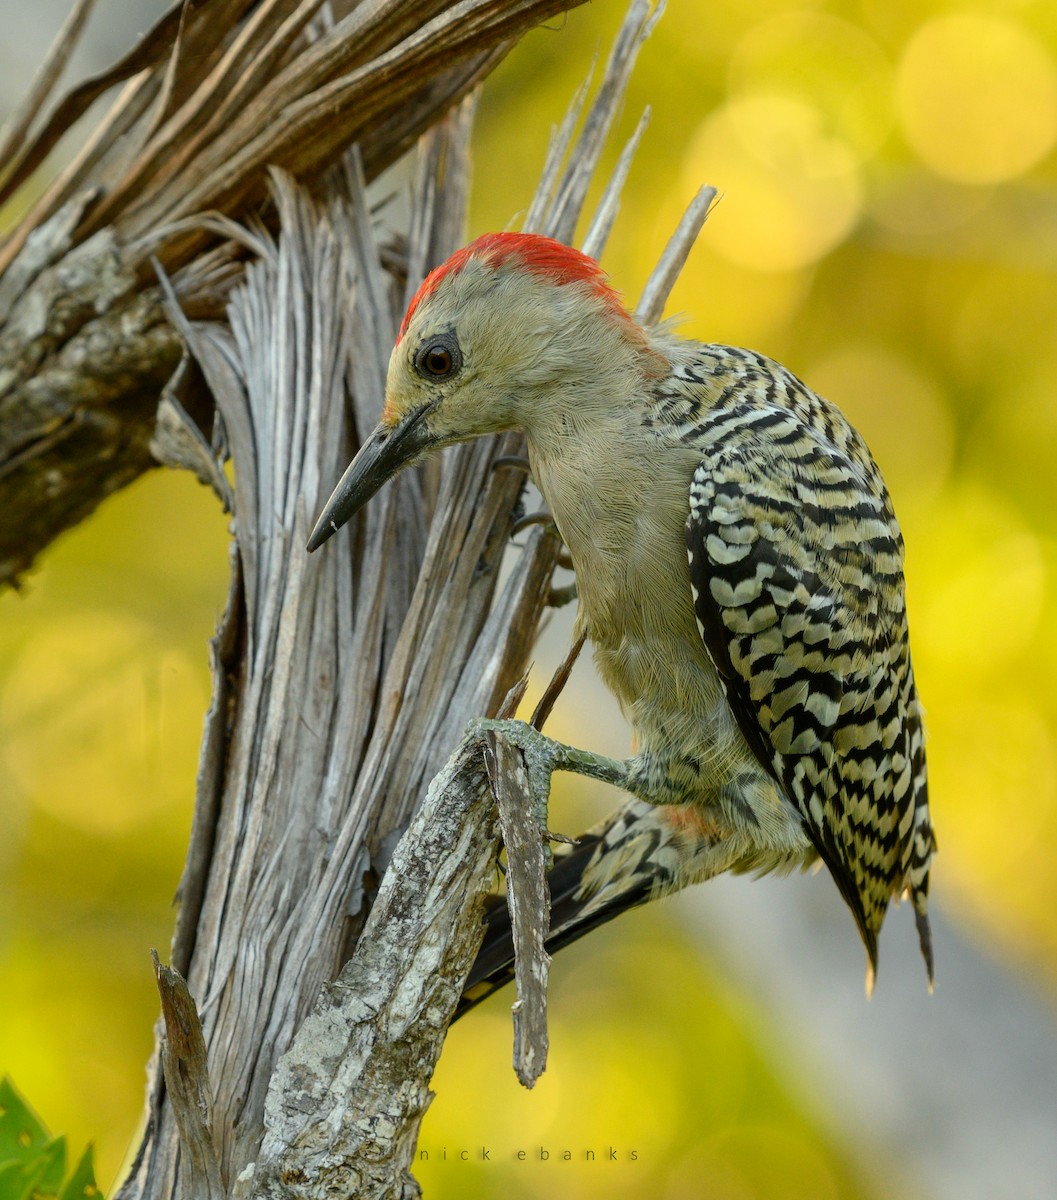 West Indian Woodpecker - Nick Ebanks